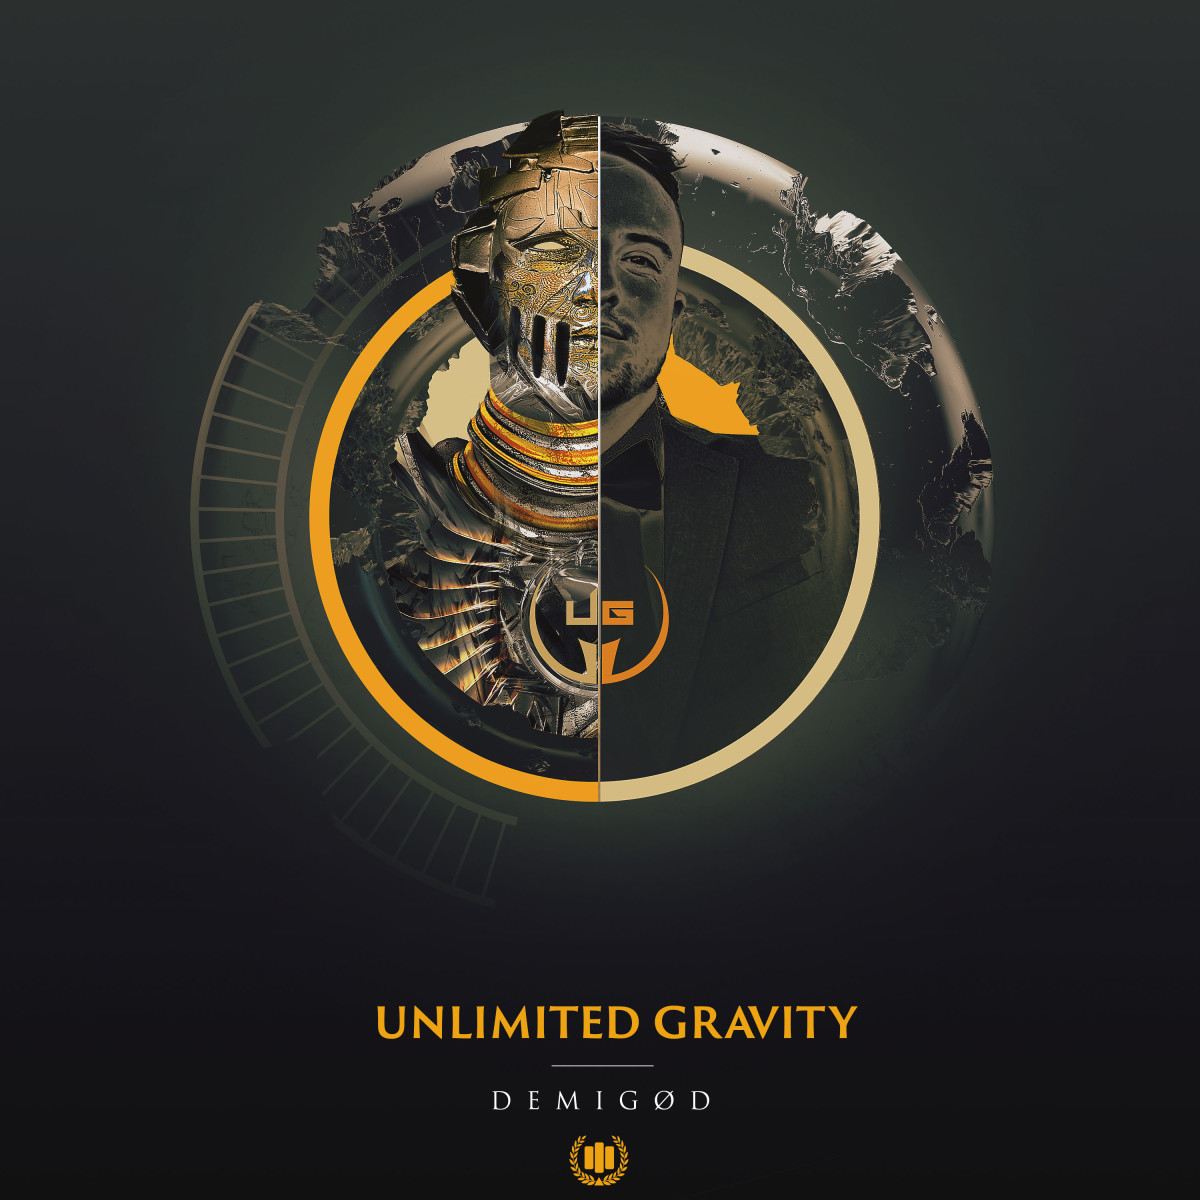 Unlimited Gravity (Ronnie Weberg) - DEMIGOD EP + Steeze Manifesto Single